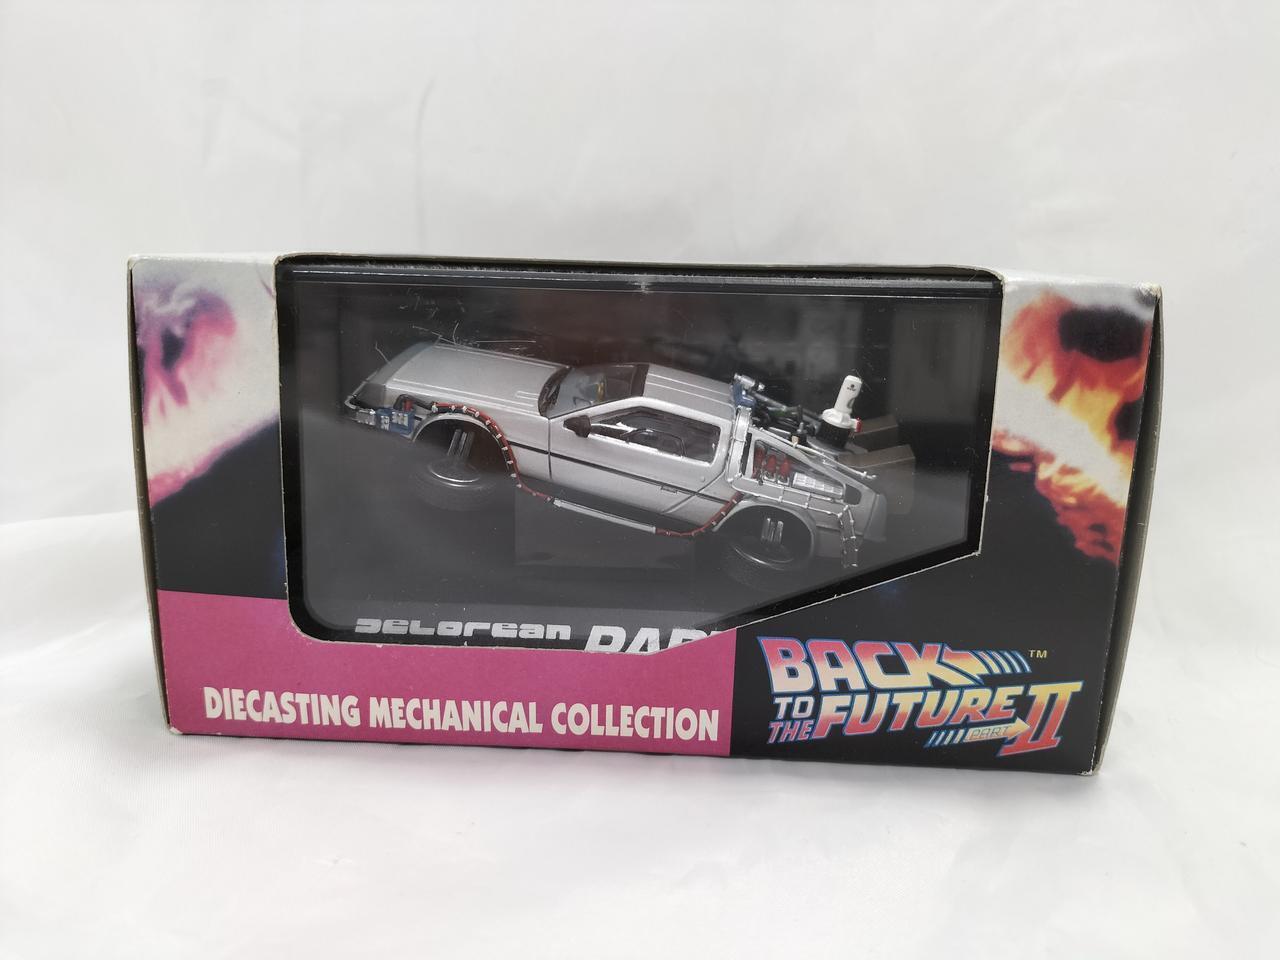 DeLorean PARTII. 1 43 die cast mecha collection series No.2 BACK